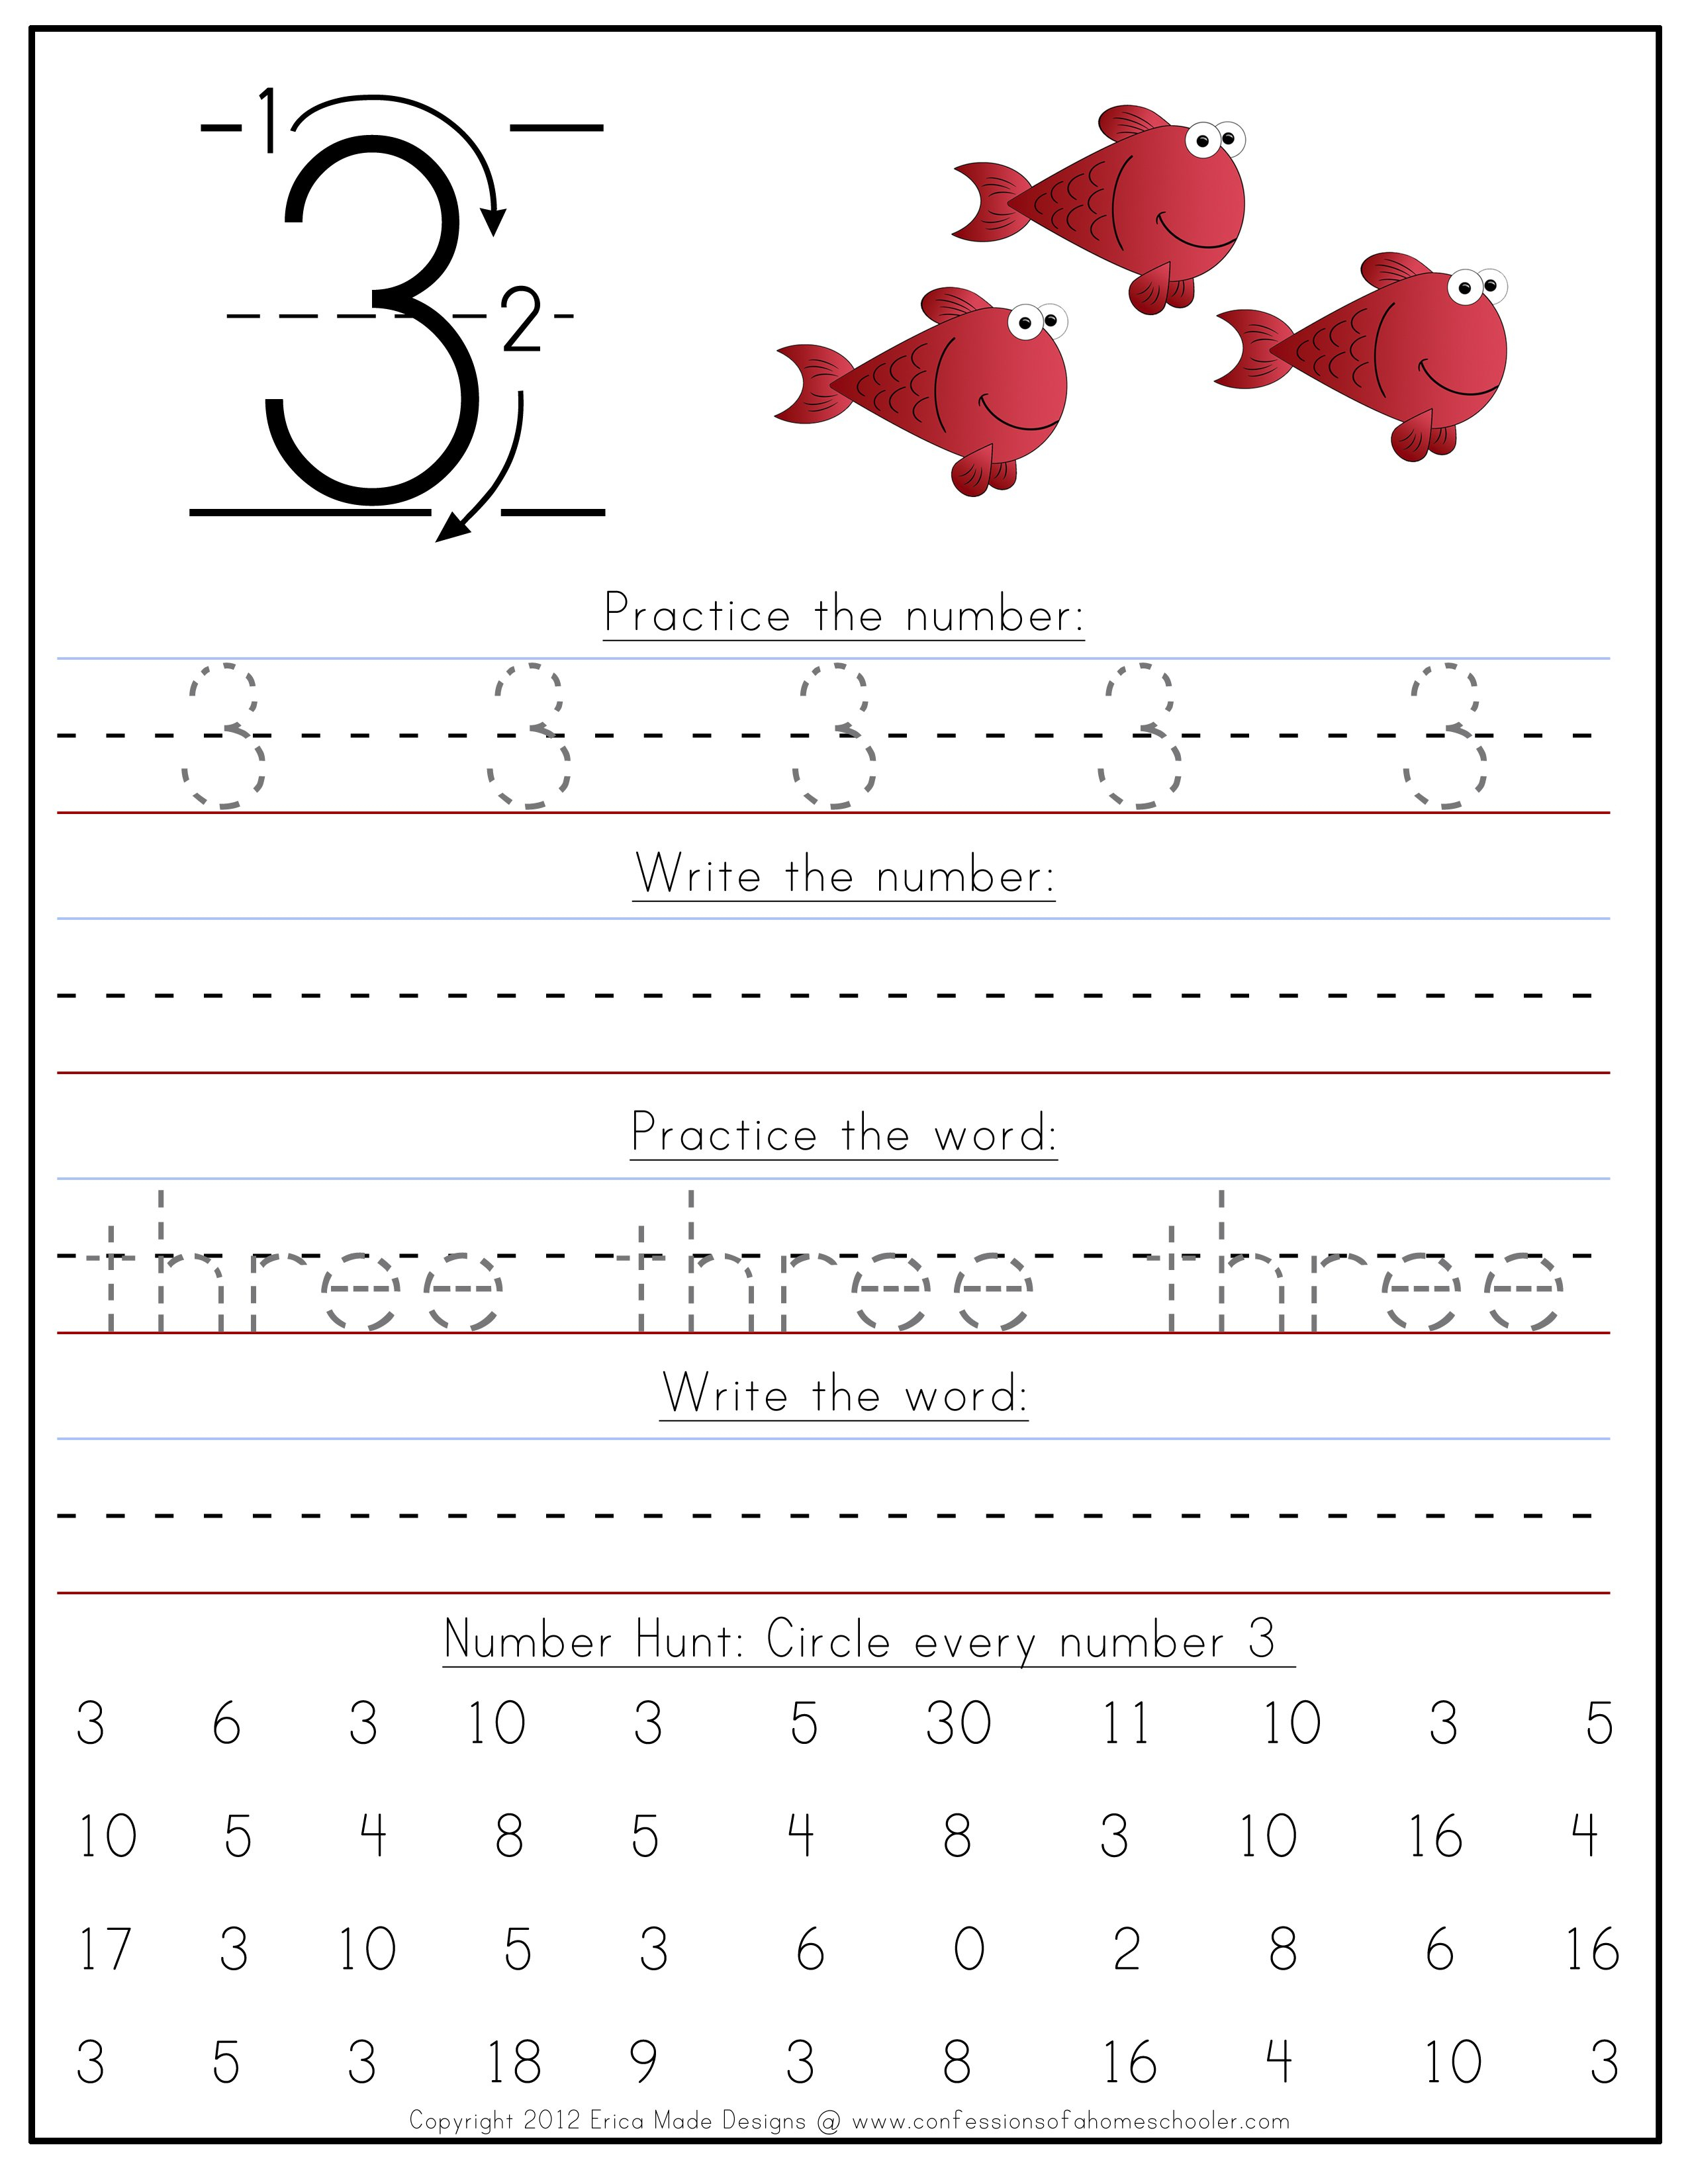 Kindergarten Number Writing Worksheets  Confessions Of A Homeschooler Or Number Writing Practice Worksheets